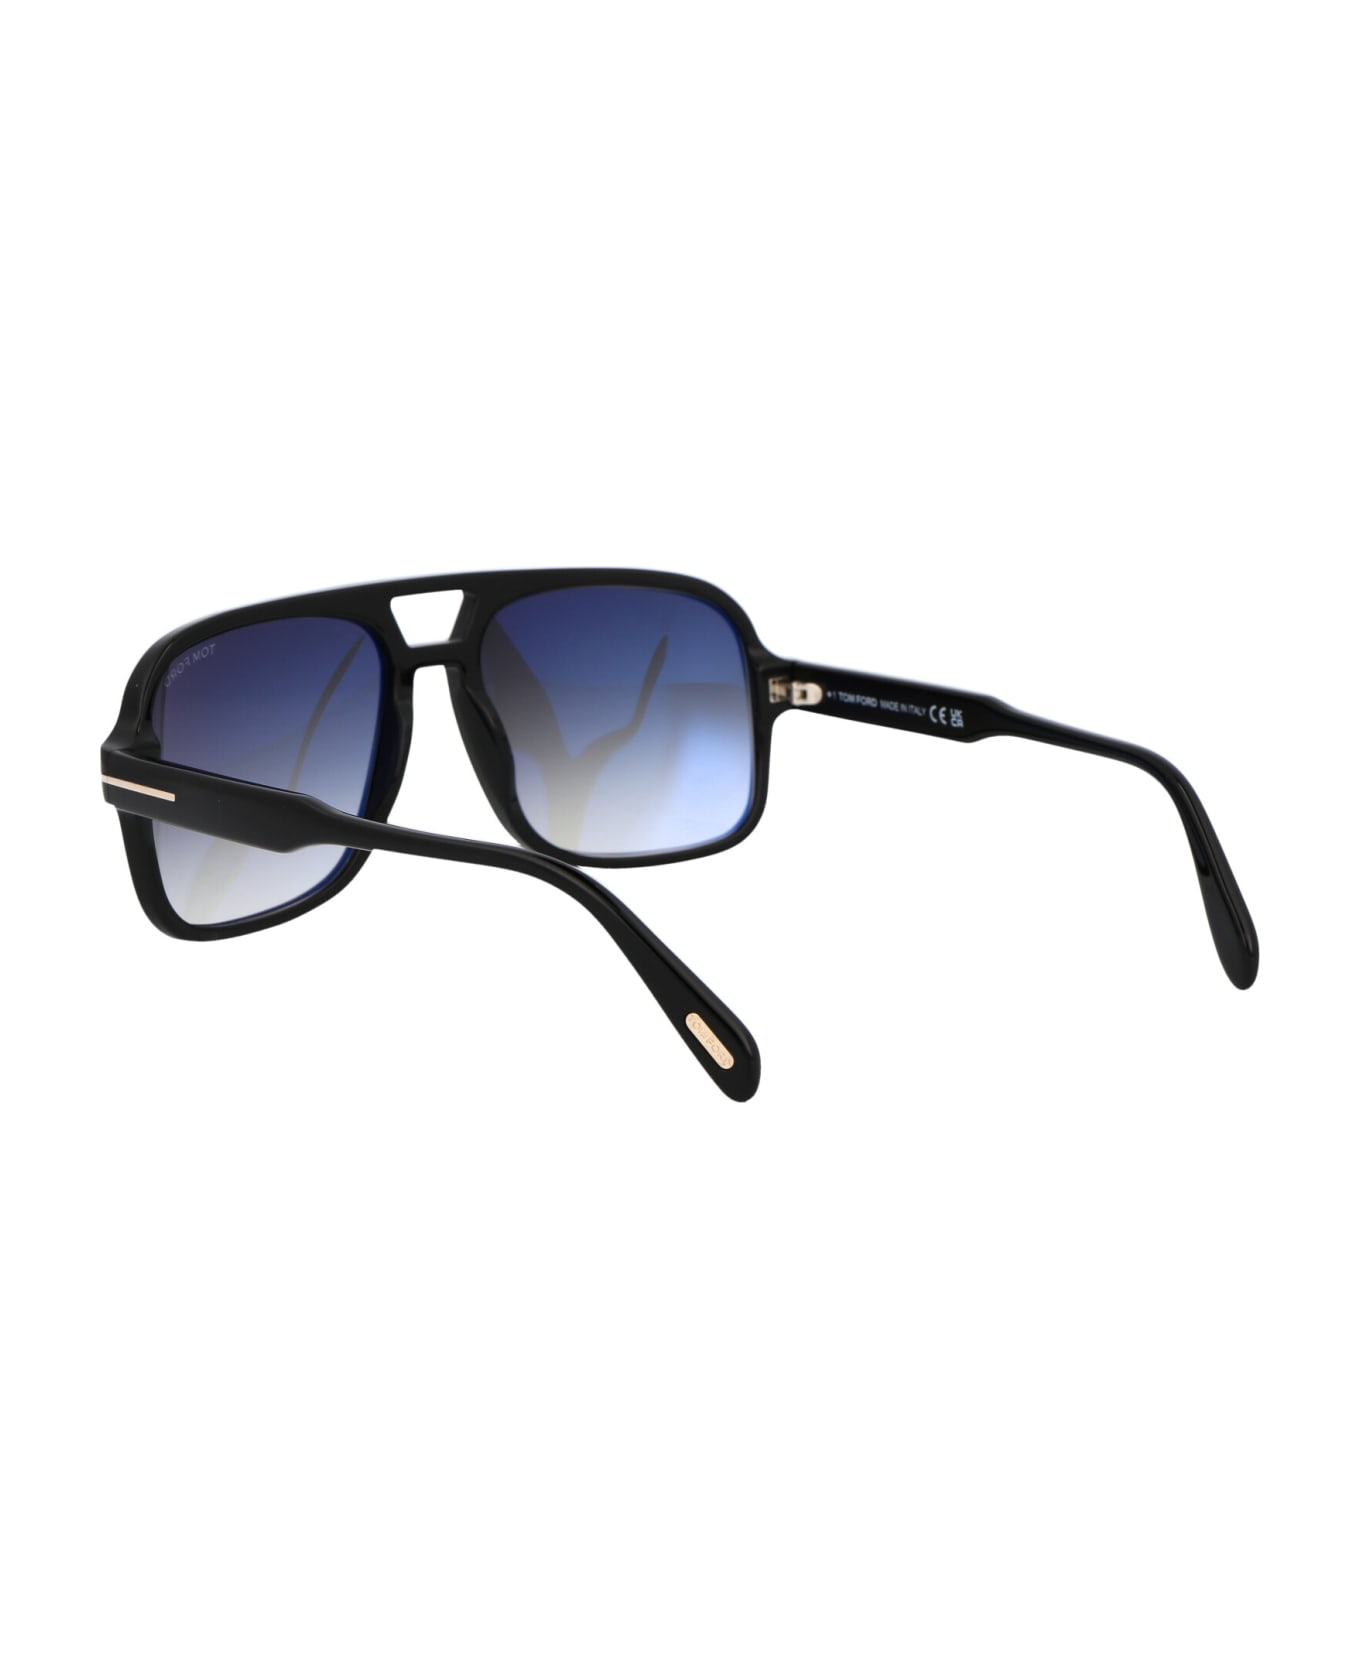 Tom Ford Eyewear Falconer-02 Sunglasses - 01B Nero Lucido / Fumo Grad サングラス